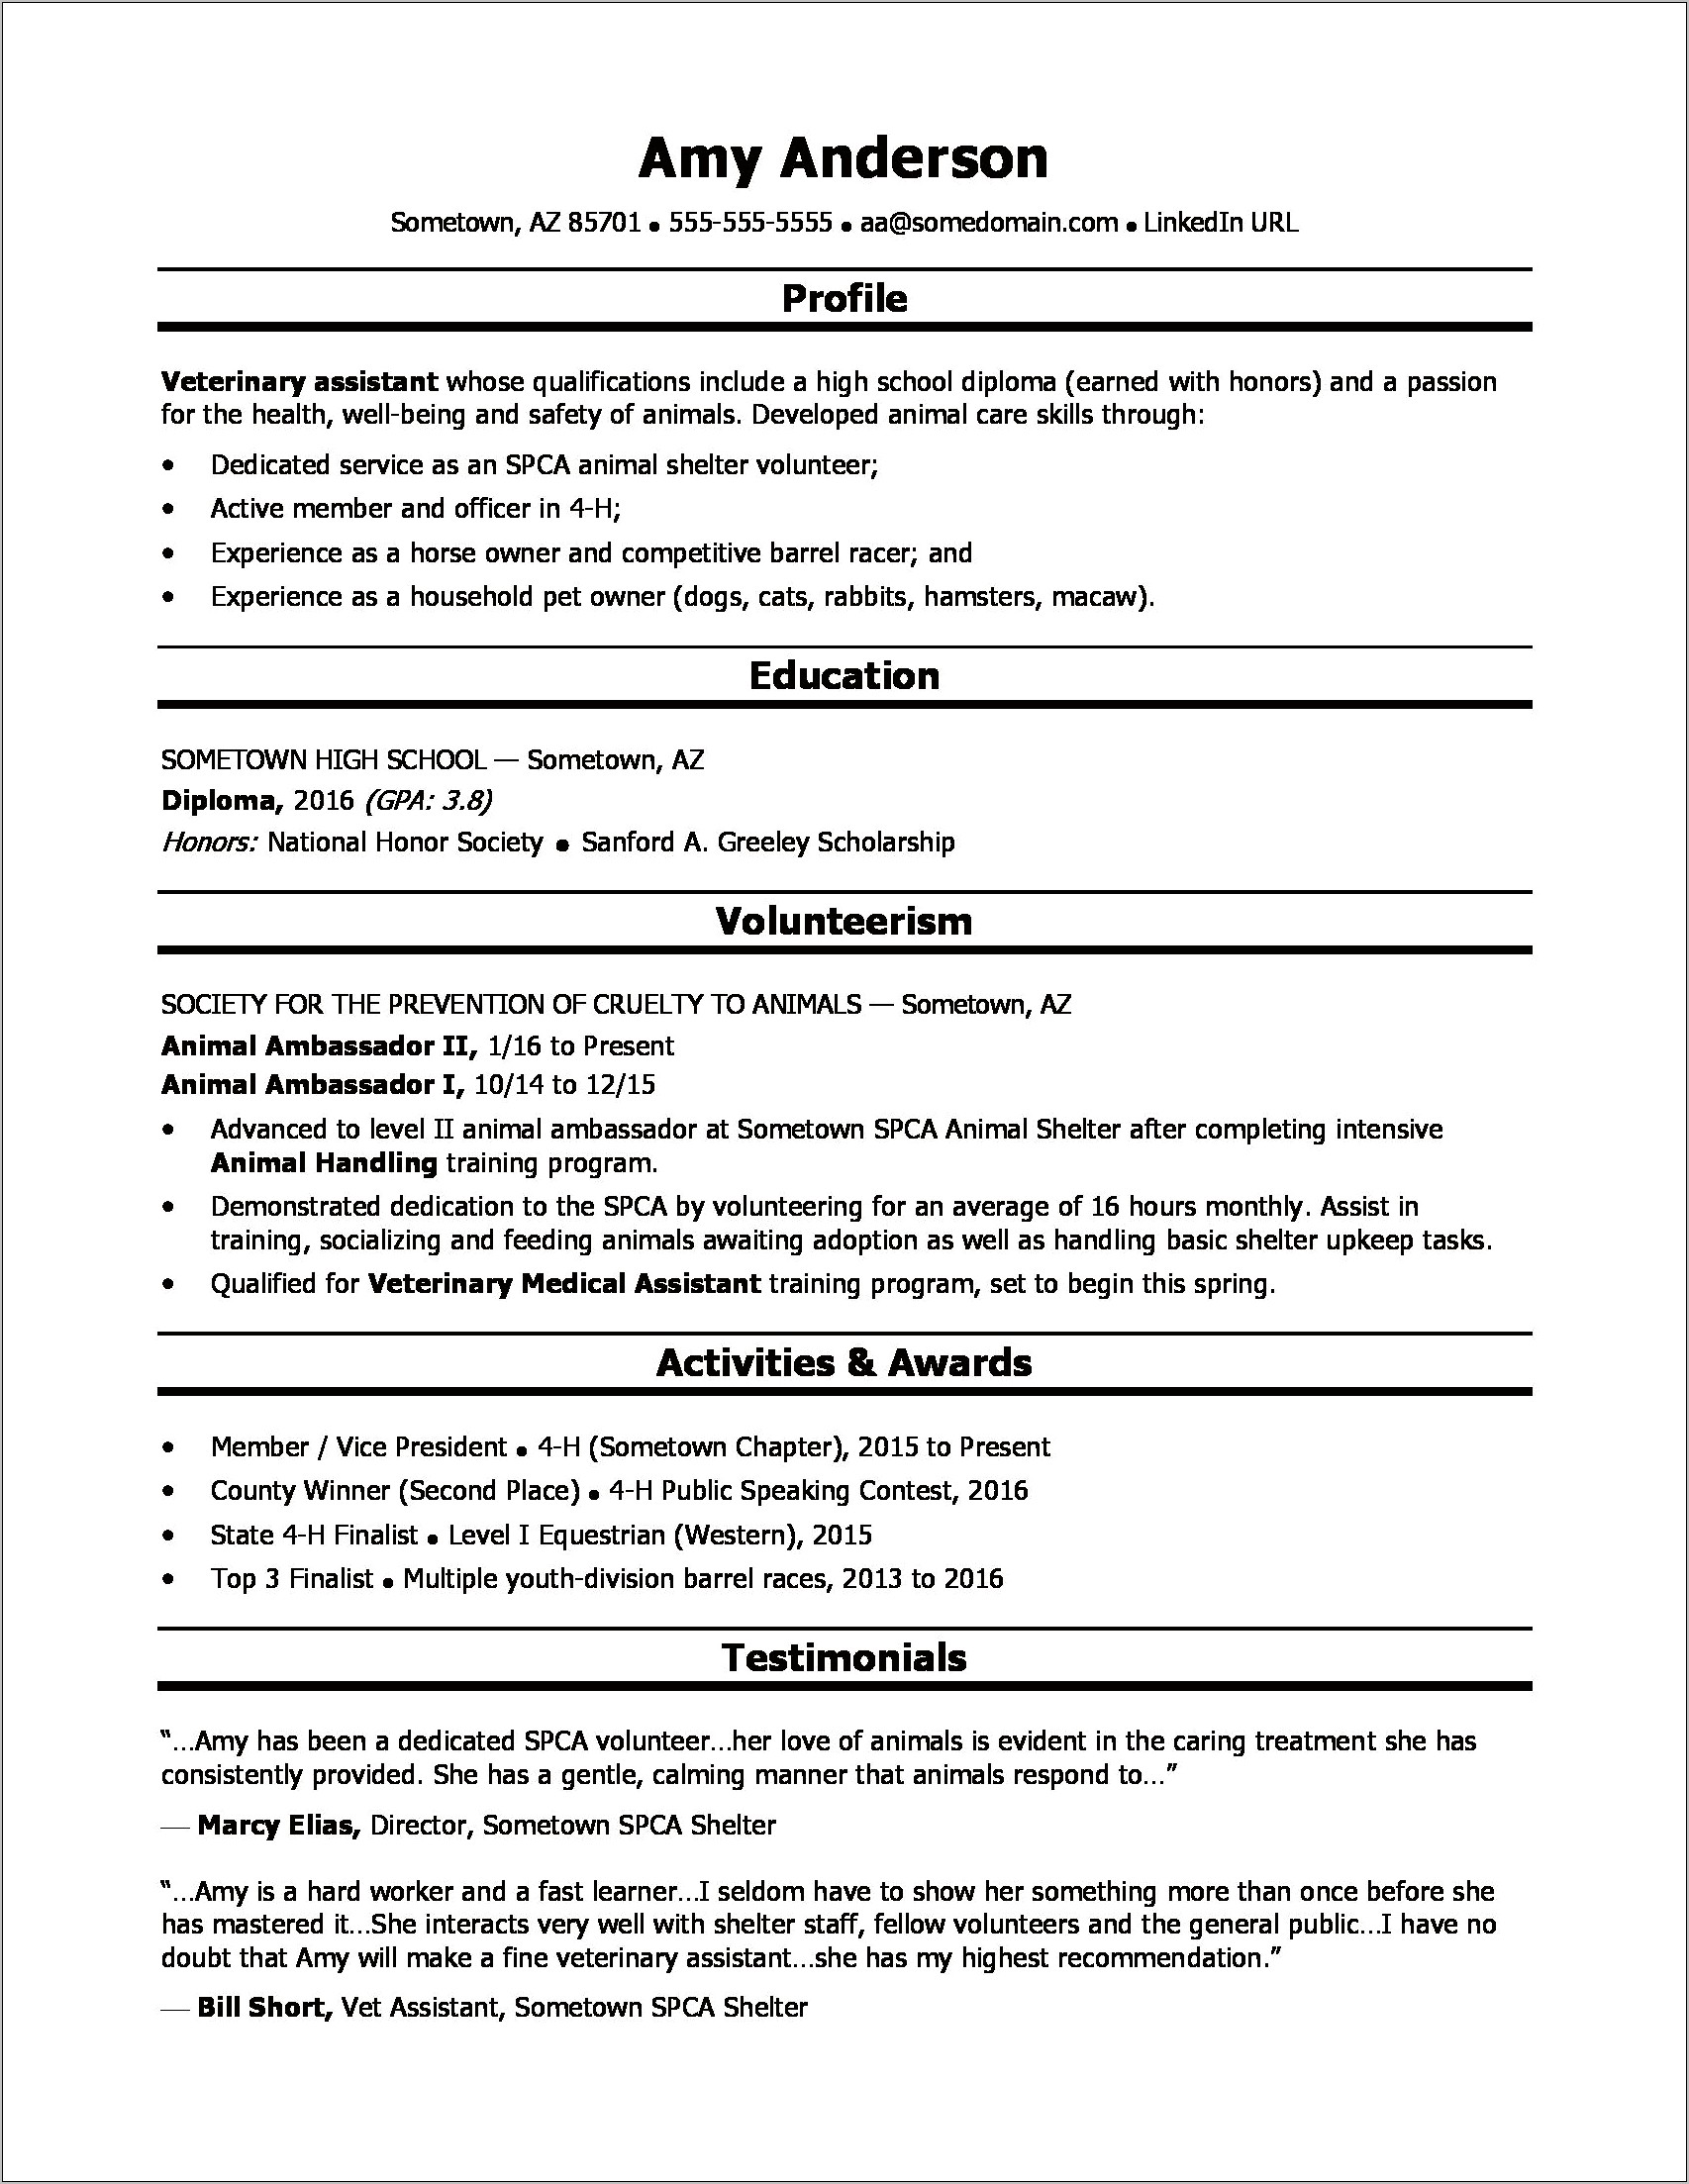 Resume Profile For Applying To Grad School